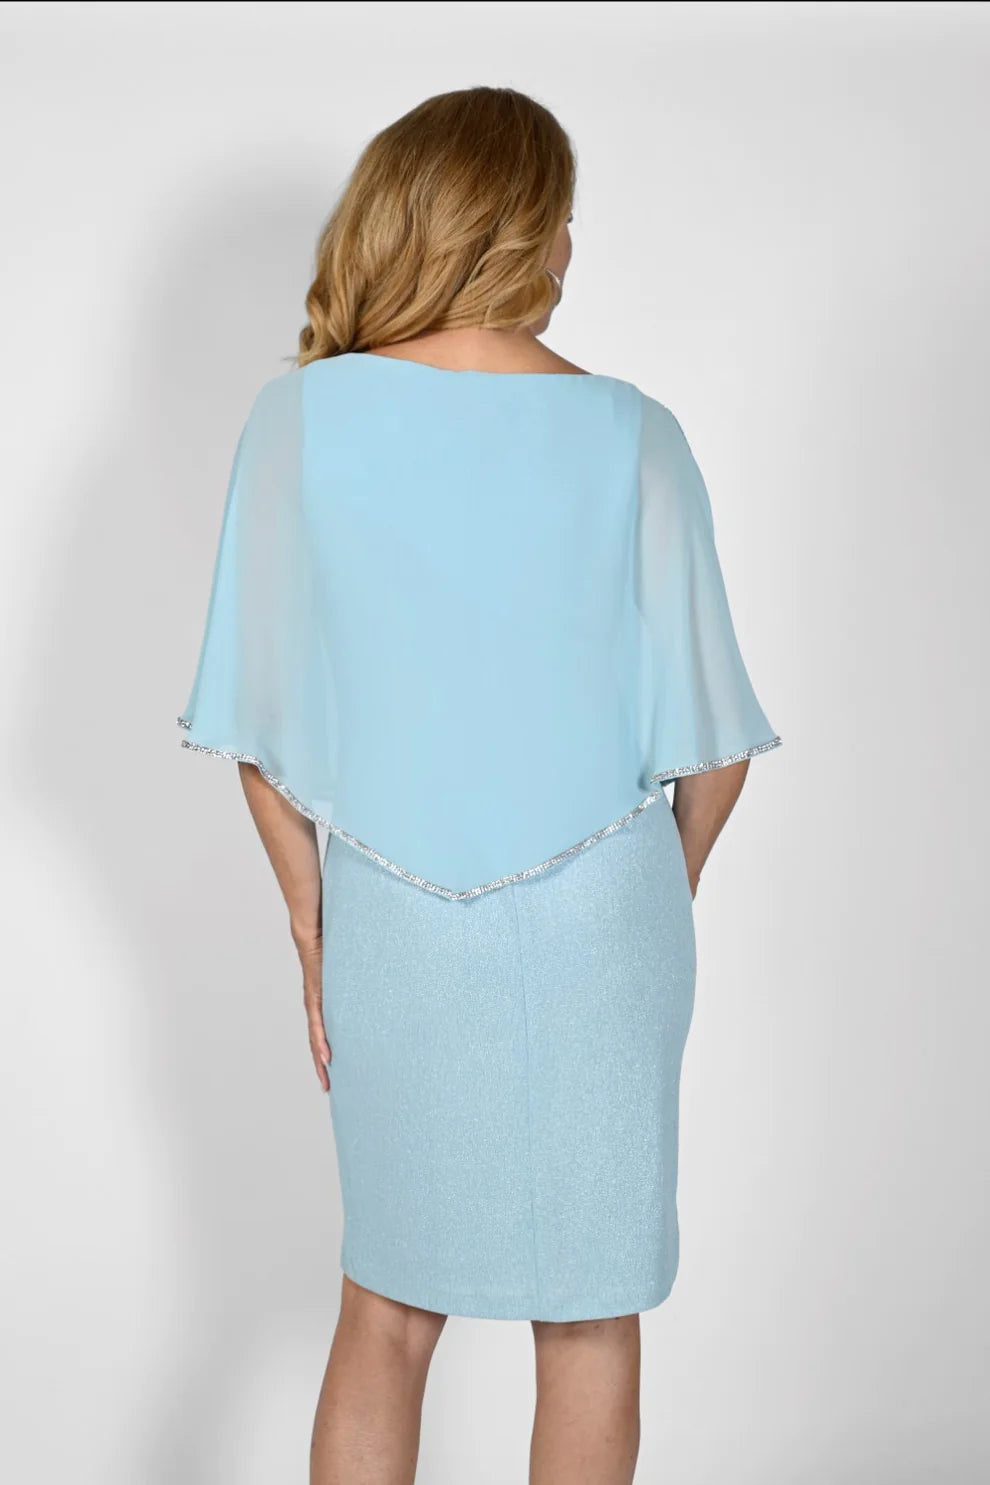 Frank Lyman Rhinestone Detail Overlay Dress  Style: 232103